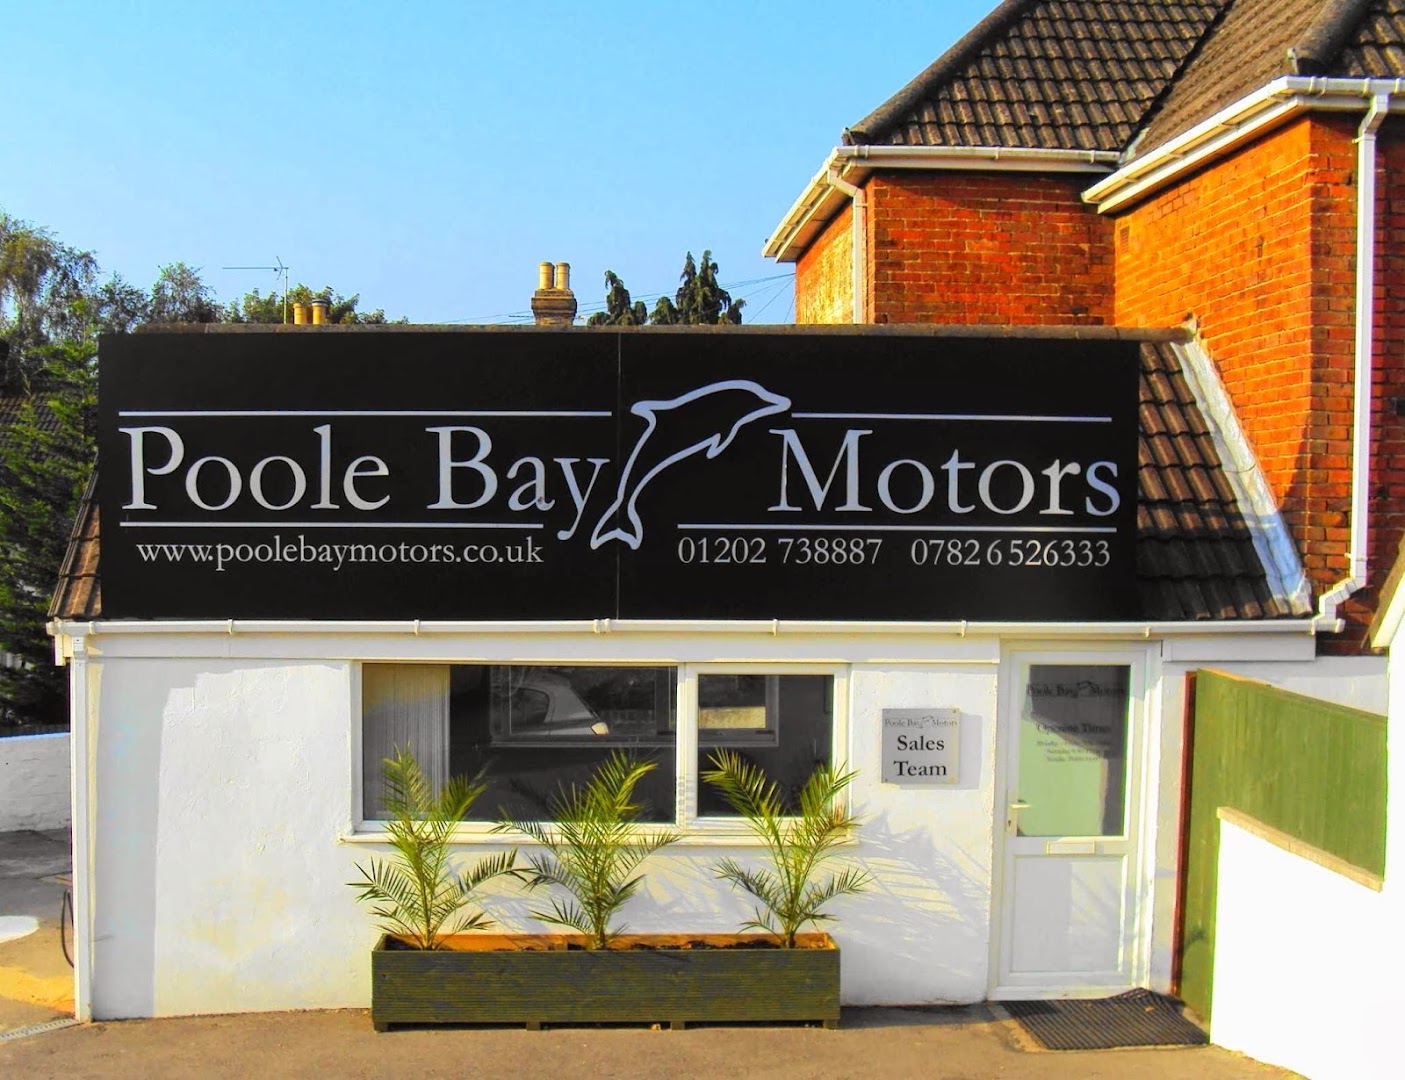 Poole Bay Motors